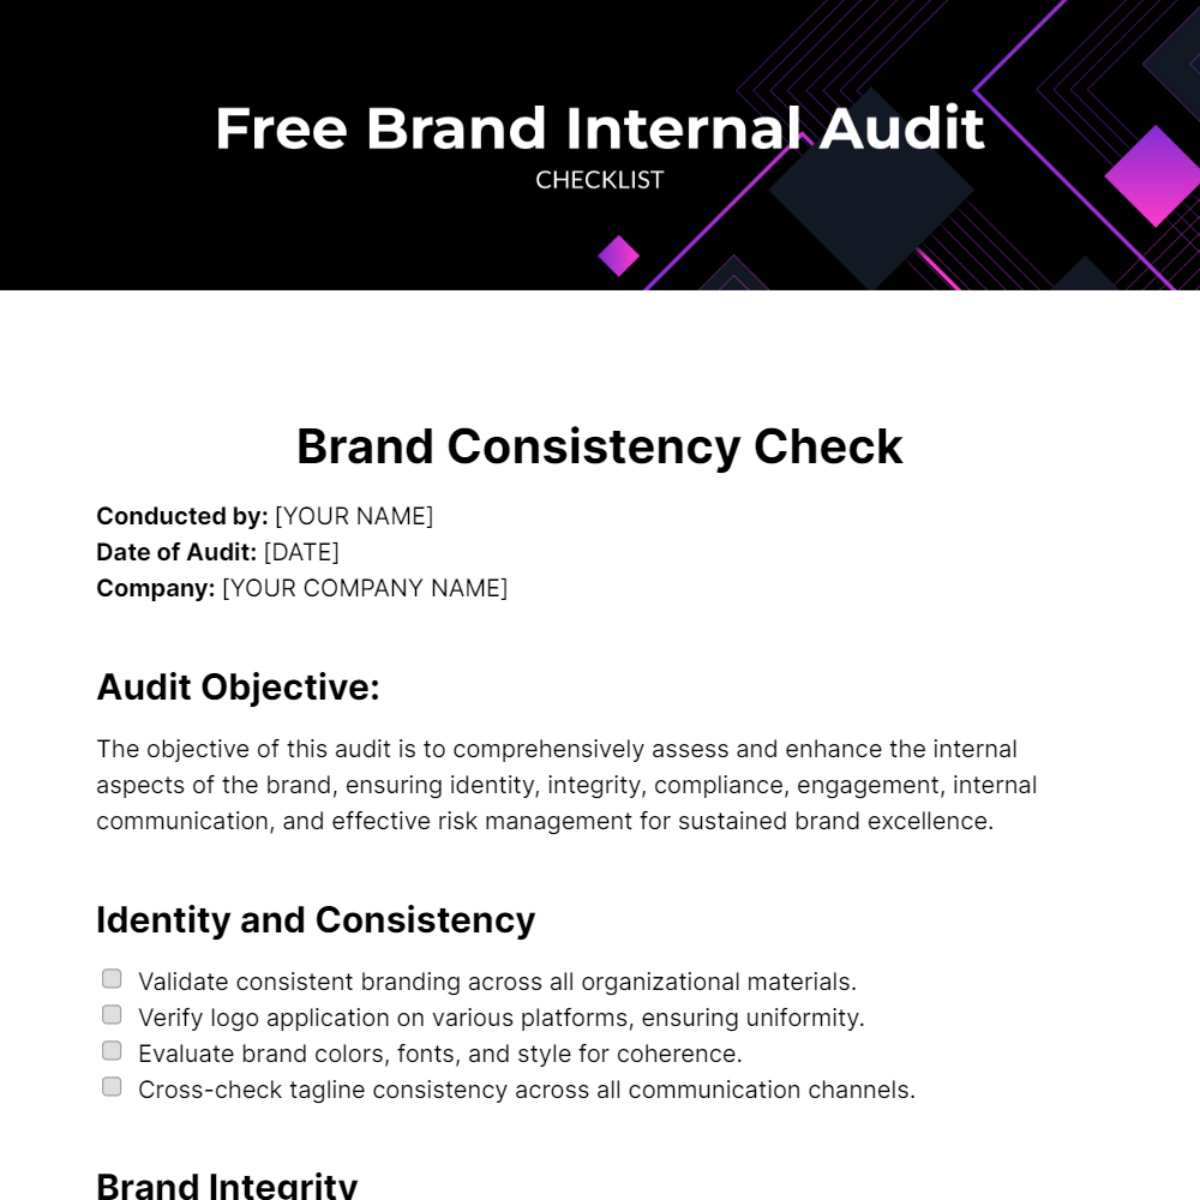 Free Brand Internal Audit Checklist Template